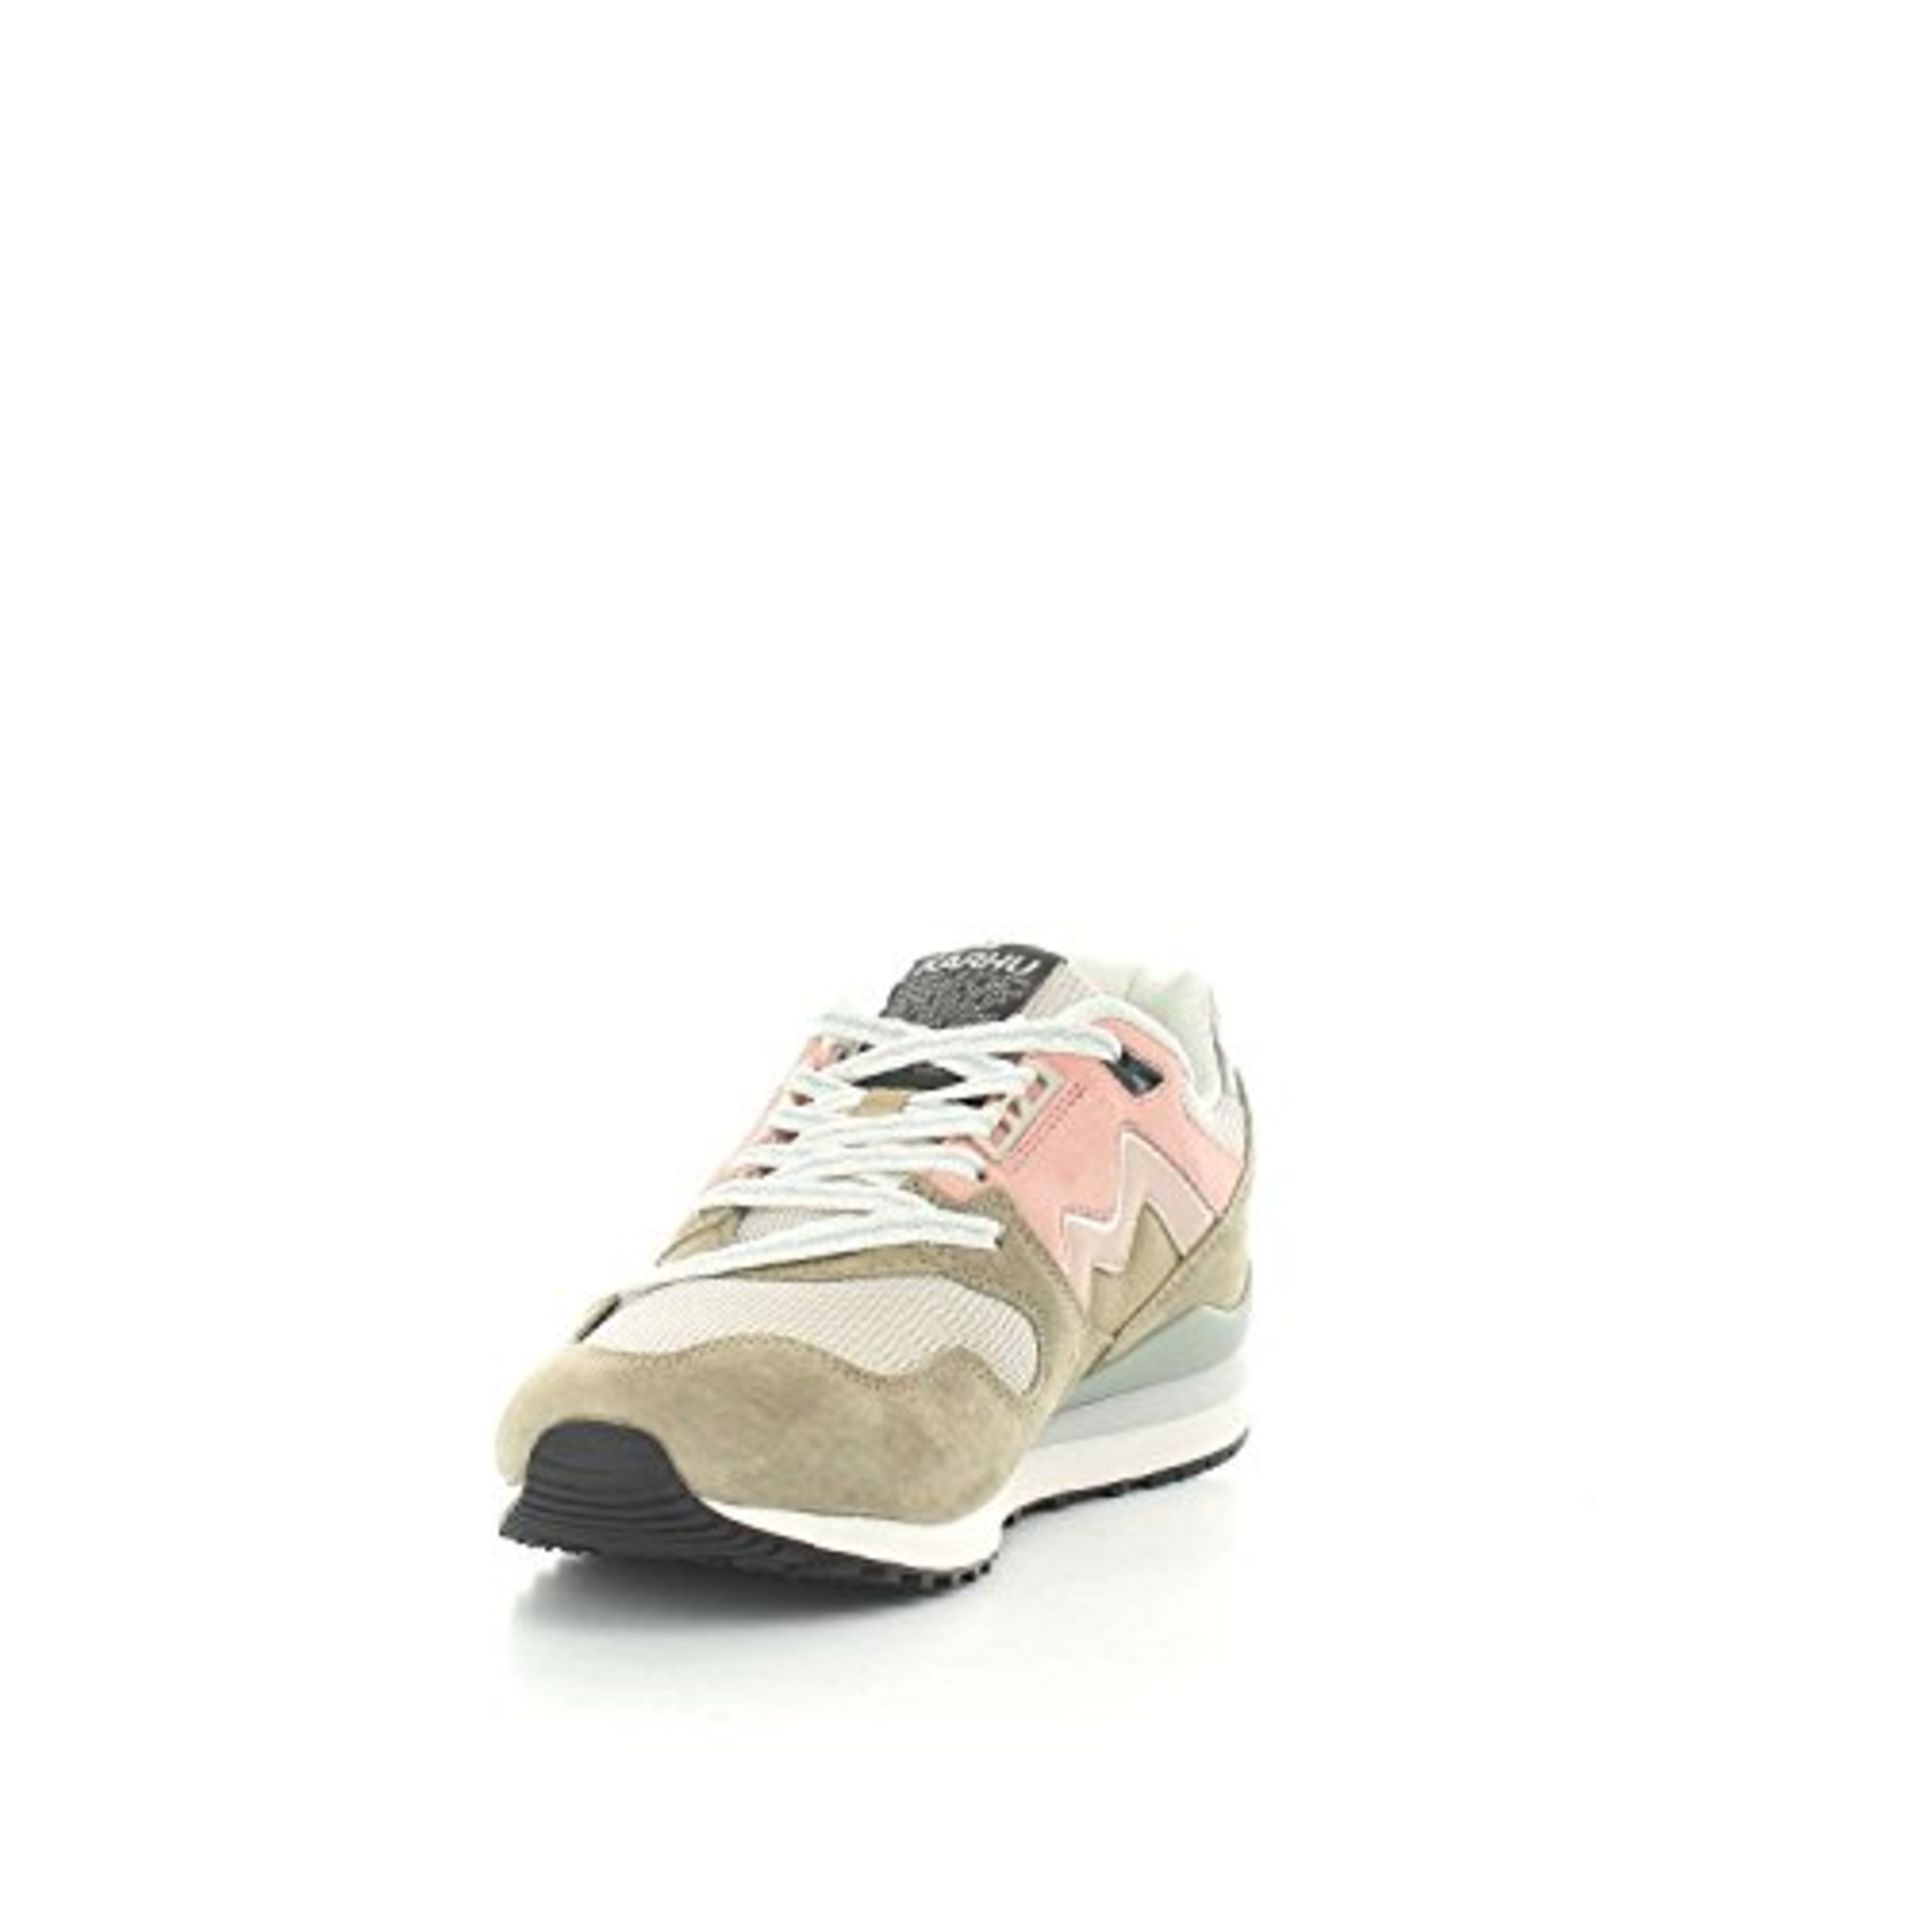 1 x Kahru F802629 Sneakers Man Marrone 44 Size: 9 UK | EAN: 0846171096127 - Image 4 of 5